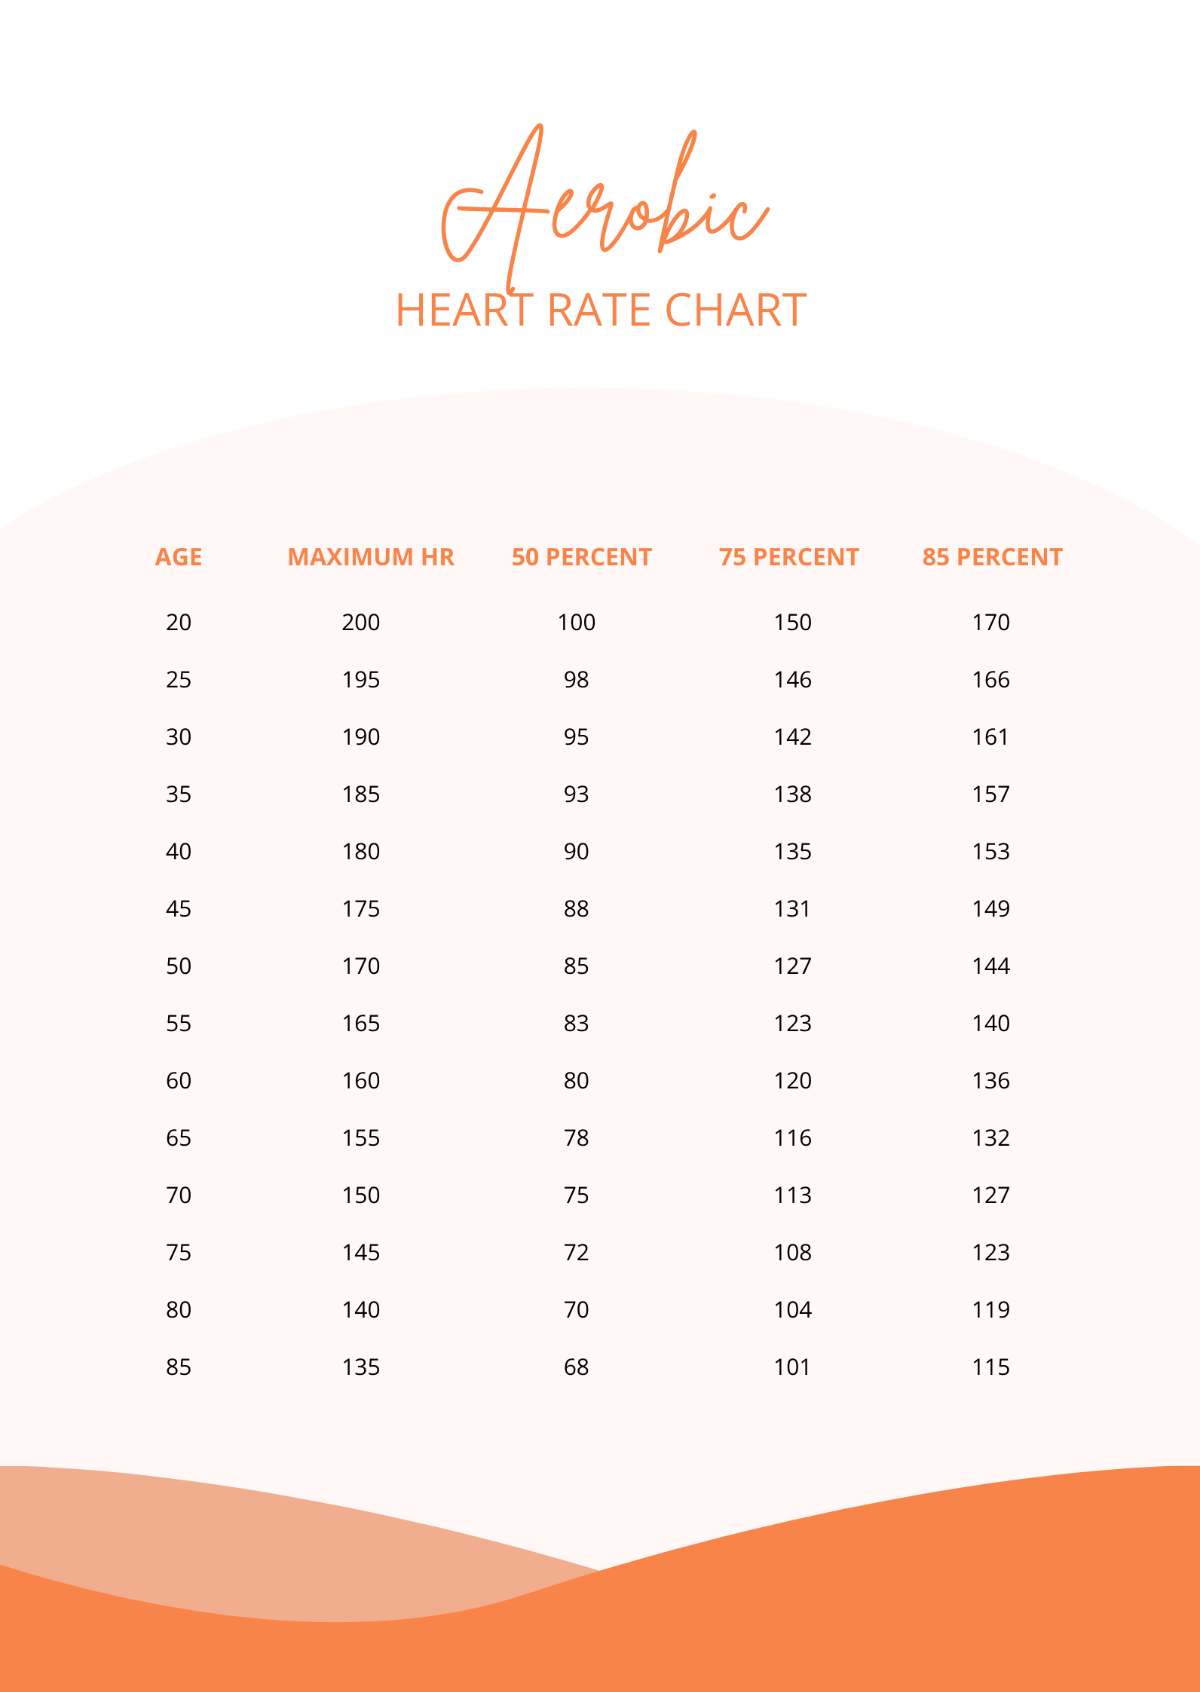 Aerobic Heart Rate Chart